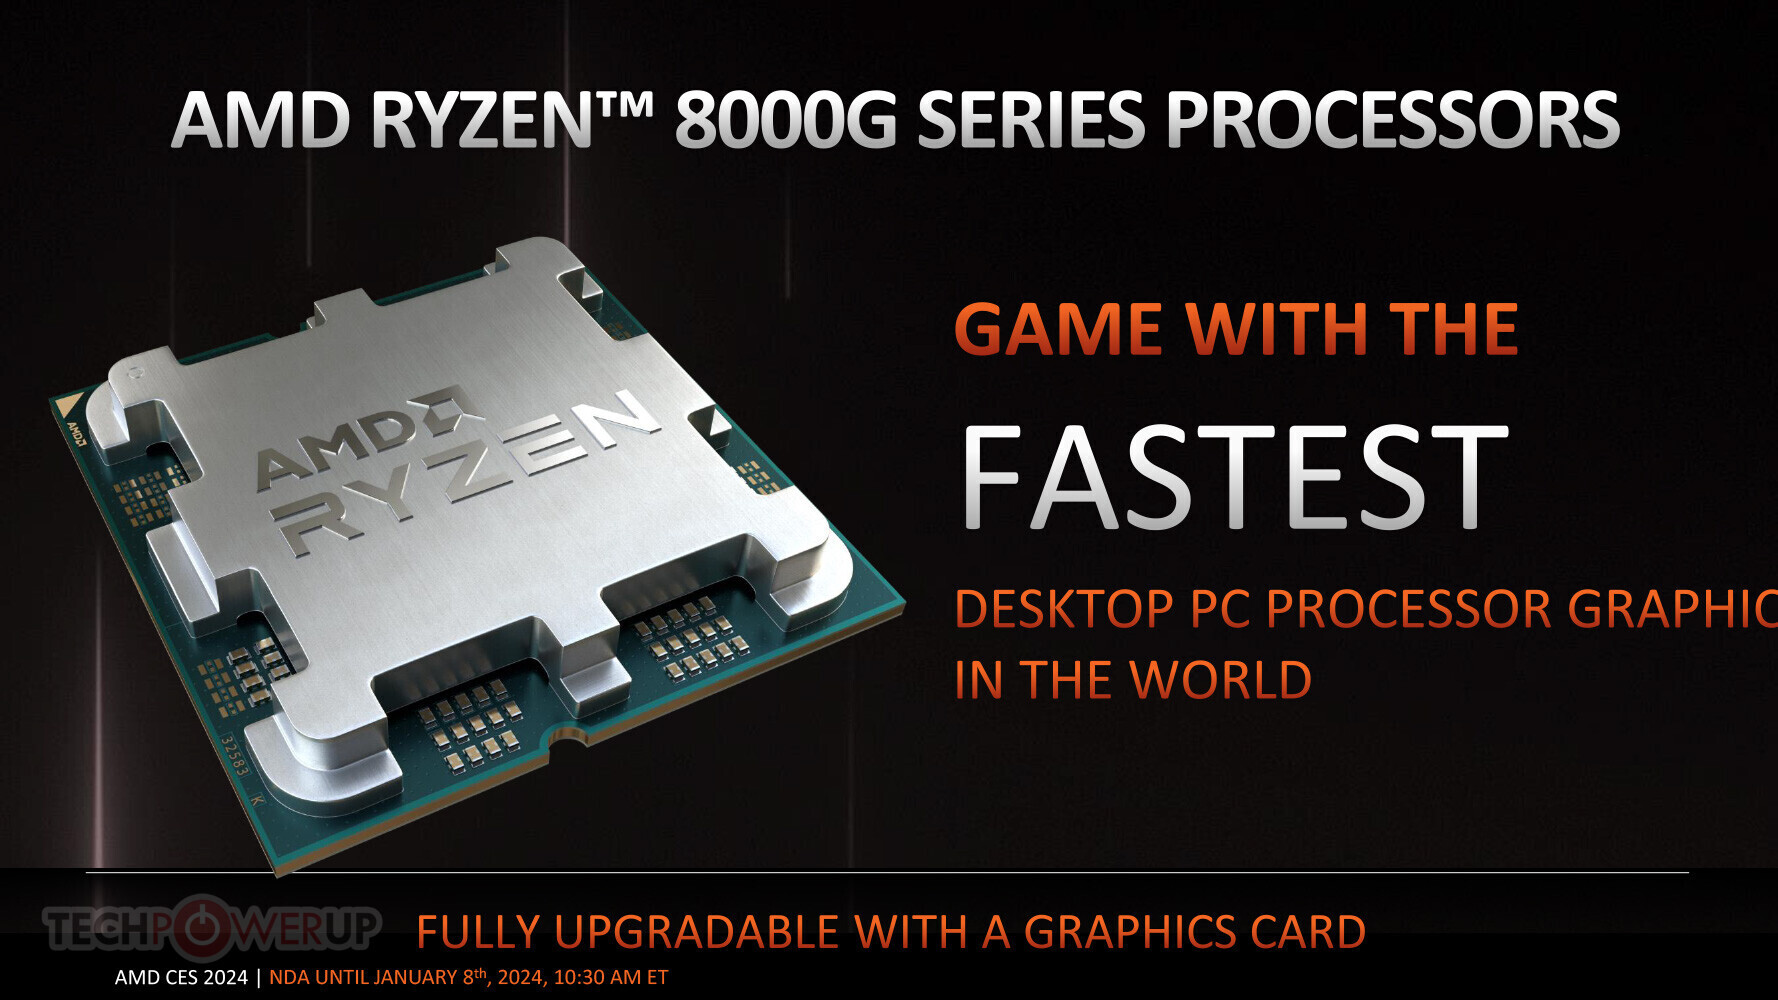 AMD Ryzen 5 7600X 6 Core & 4.4 GHz Zen 4 Desktop CPU Spotted